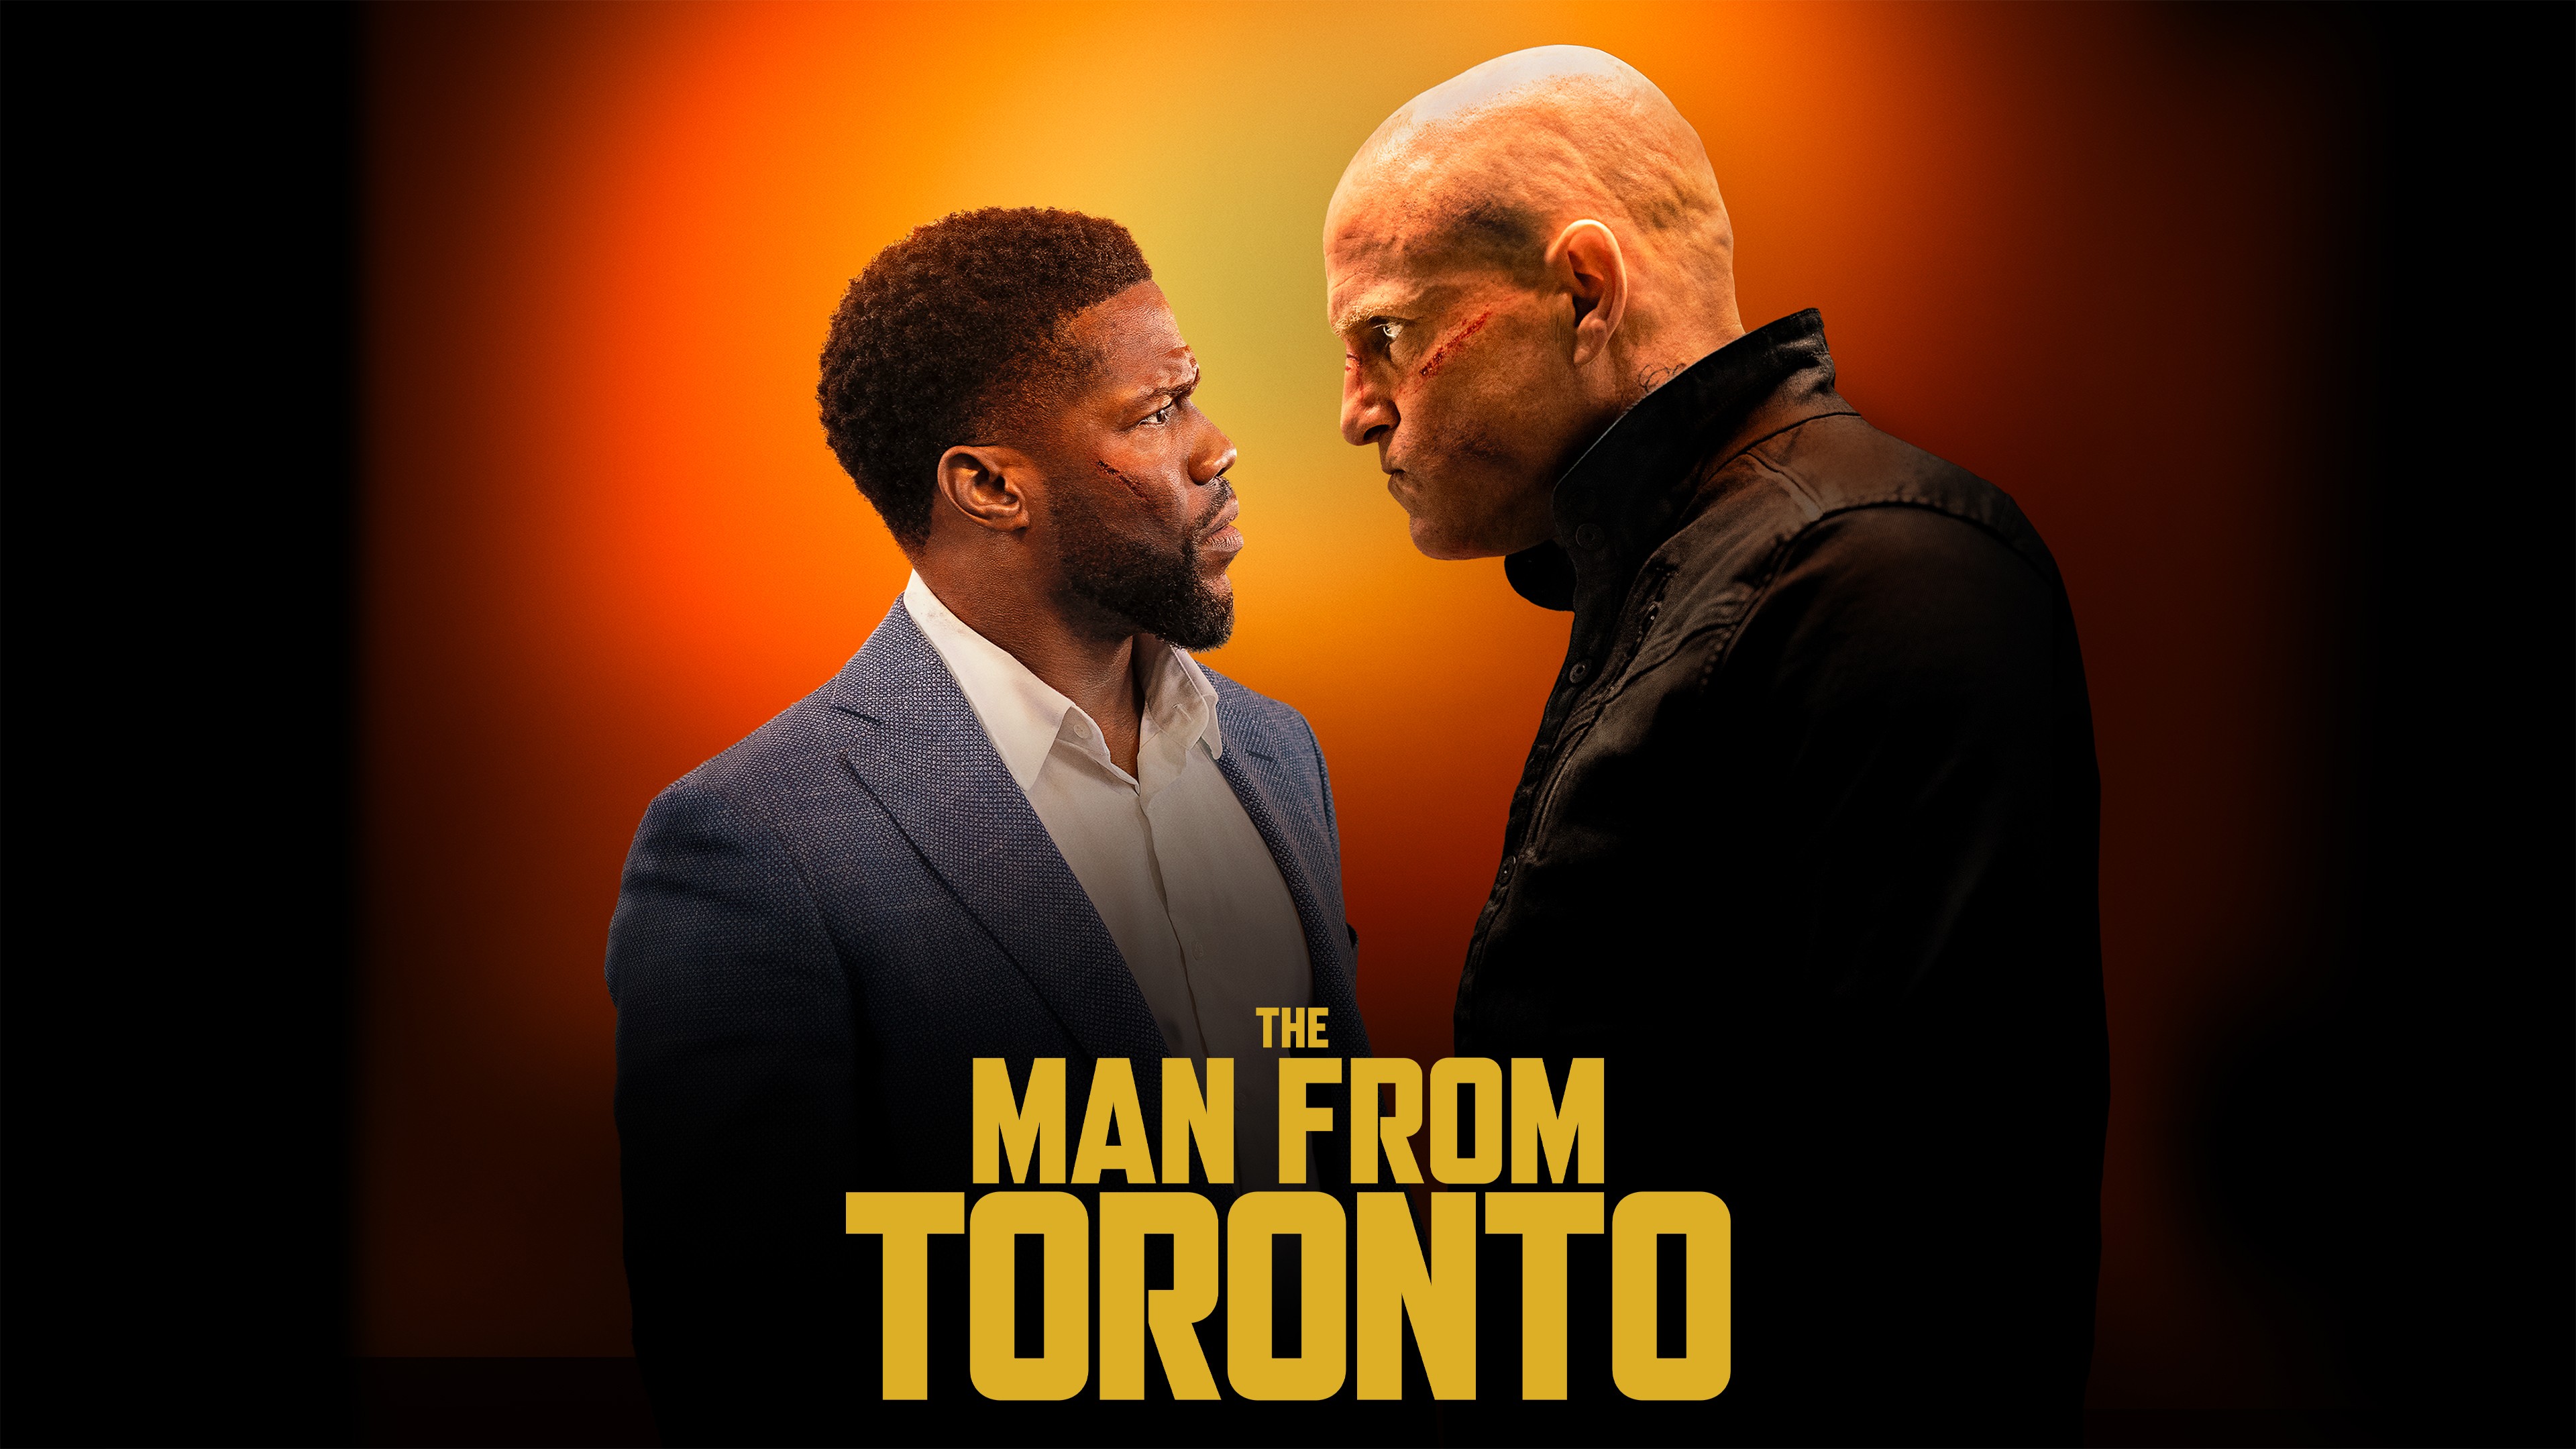 The Man from Toronto (2022 film) - Wikipedia